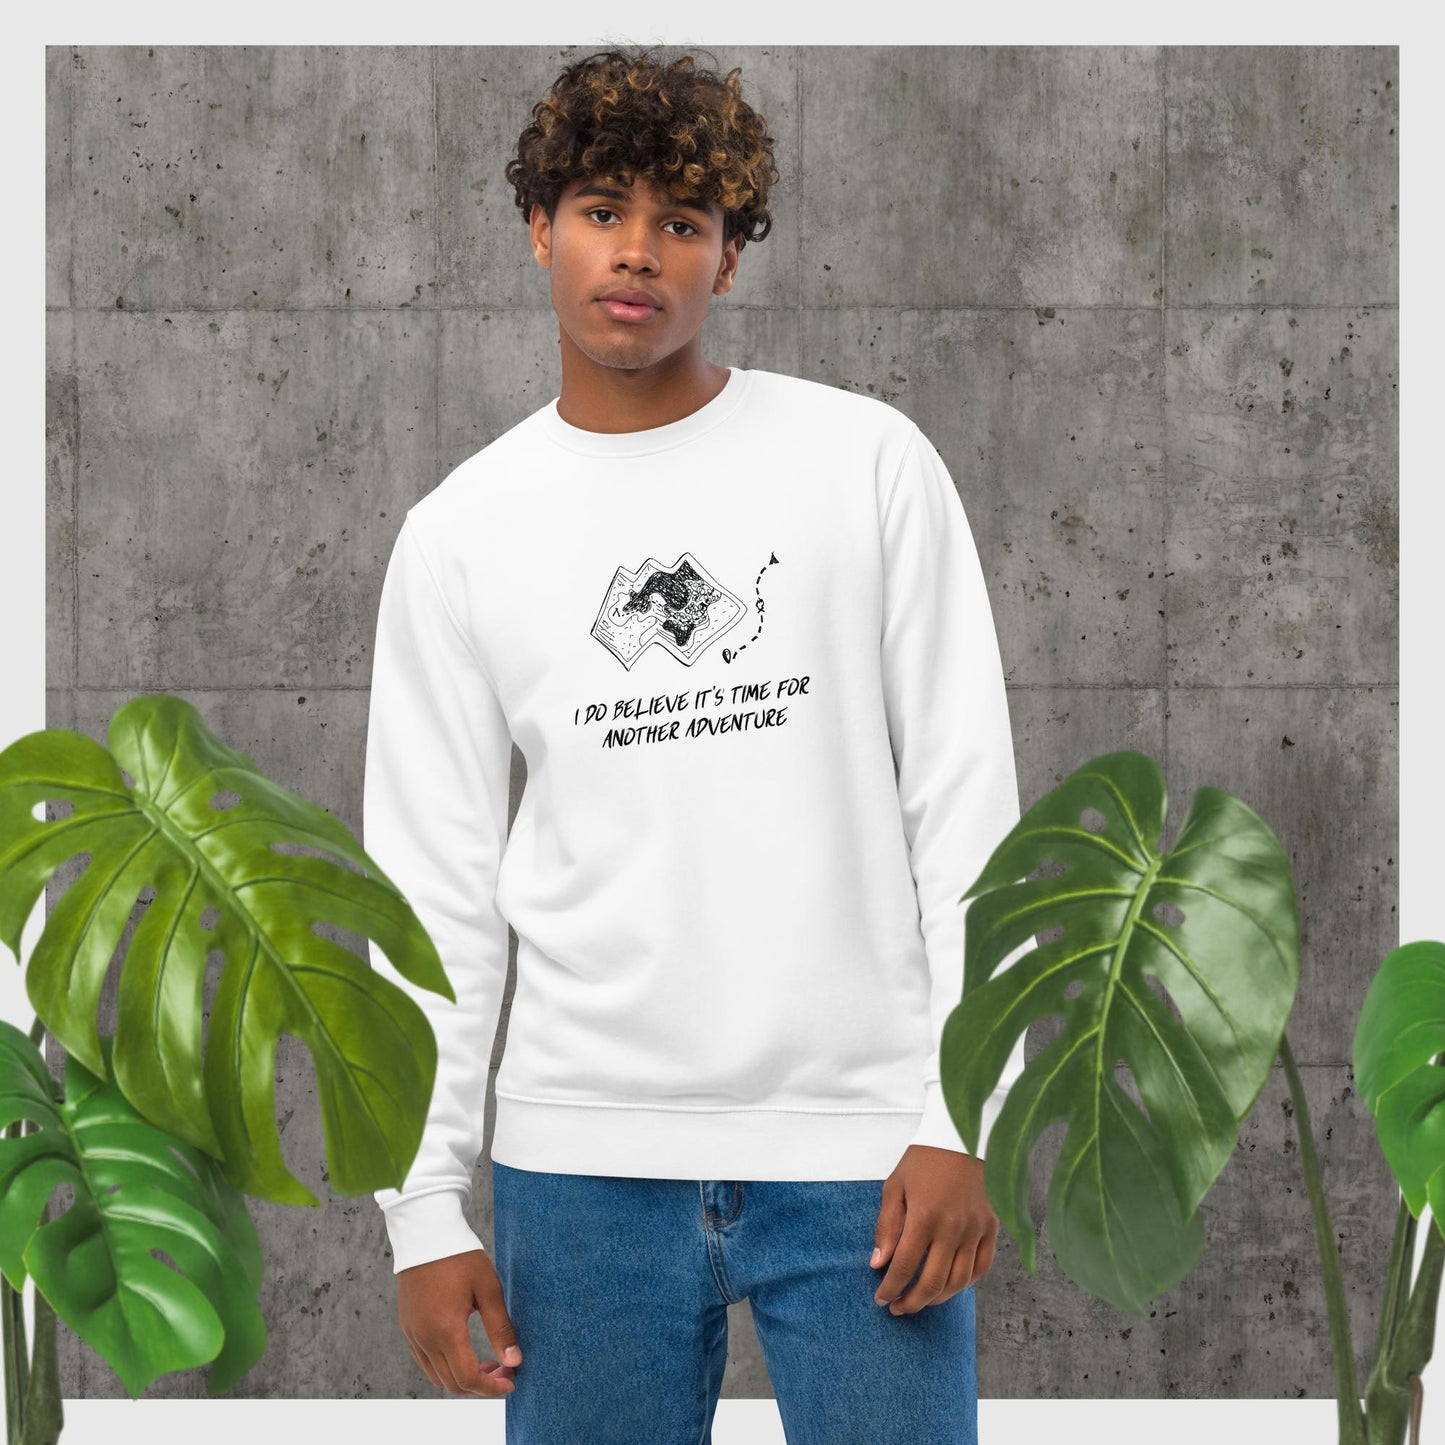 Travel 'Another Adventure' Organic Cotton Sweatshirt - Earth Sweatshirt